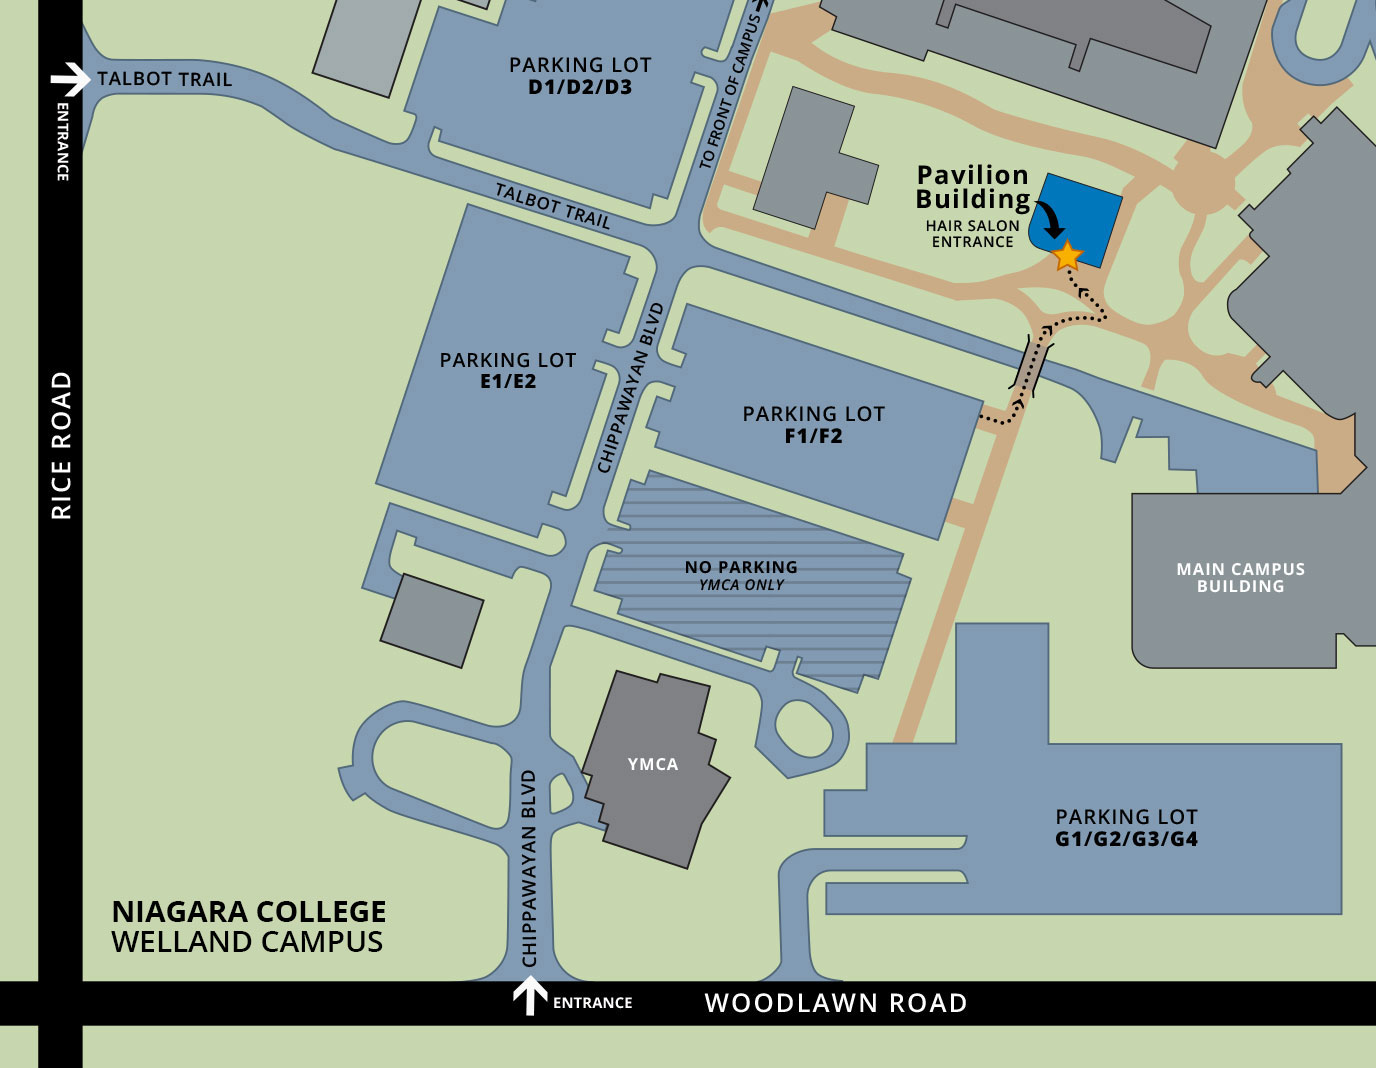 Thumbnail of campus parking map